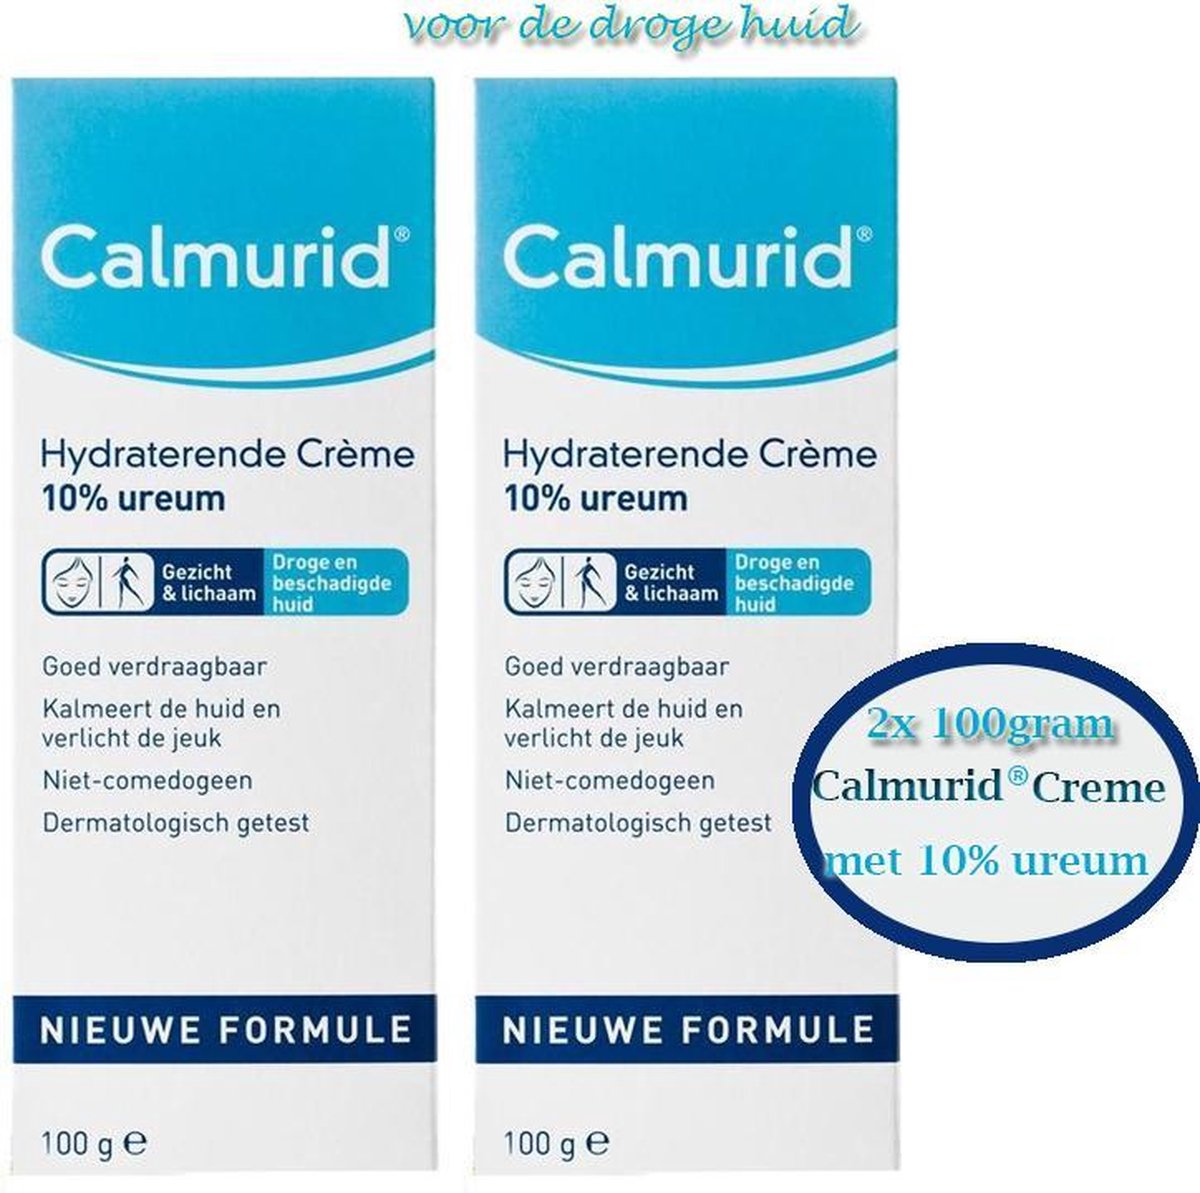 2x 100g Calmurid Hydraterende crème 10% ureum | bol.com